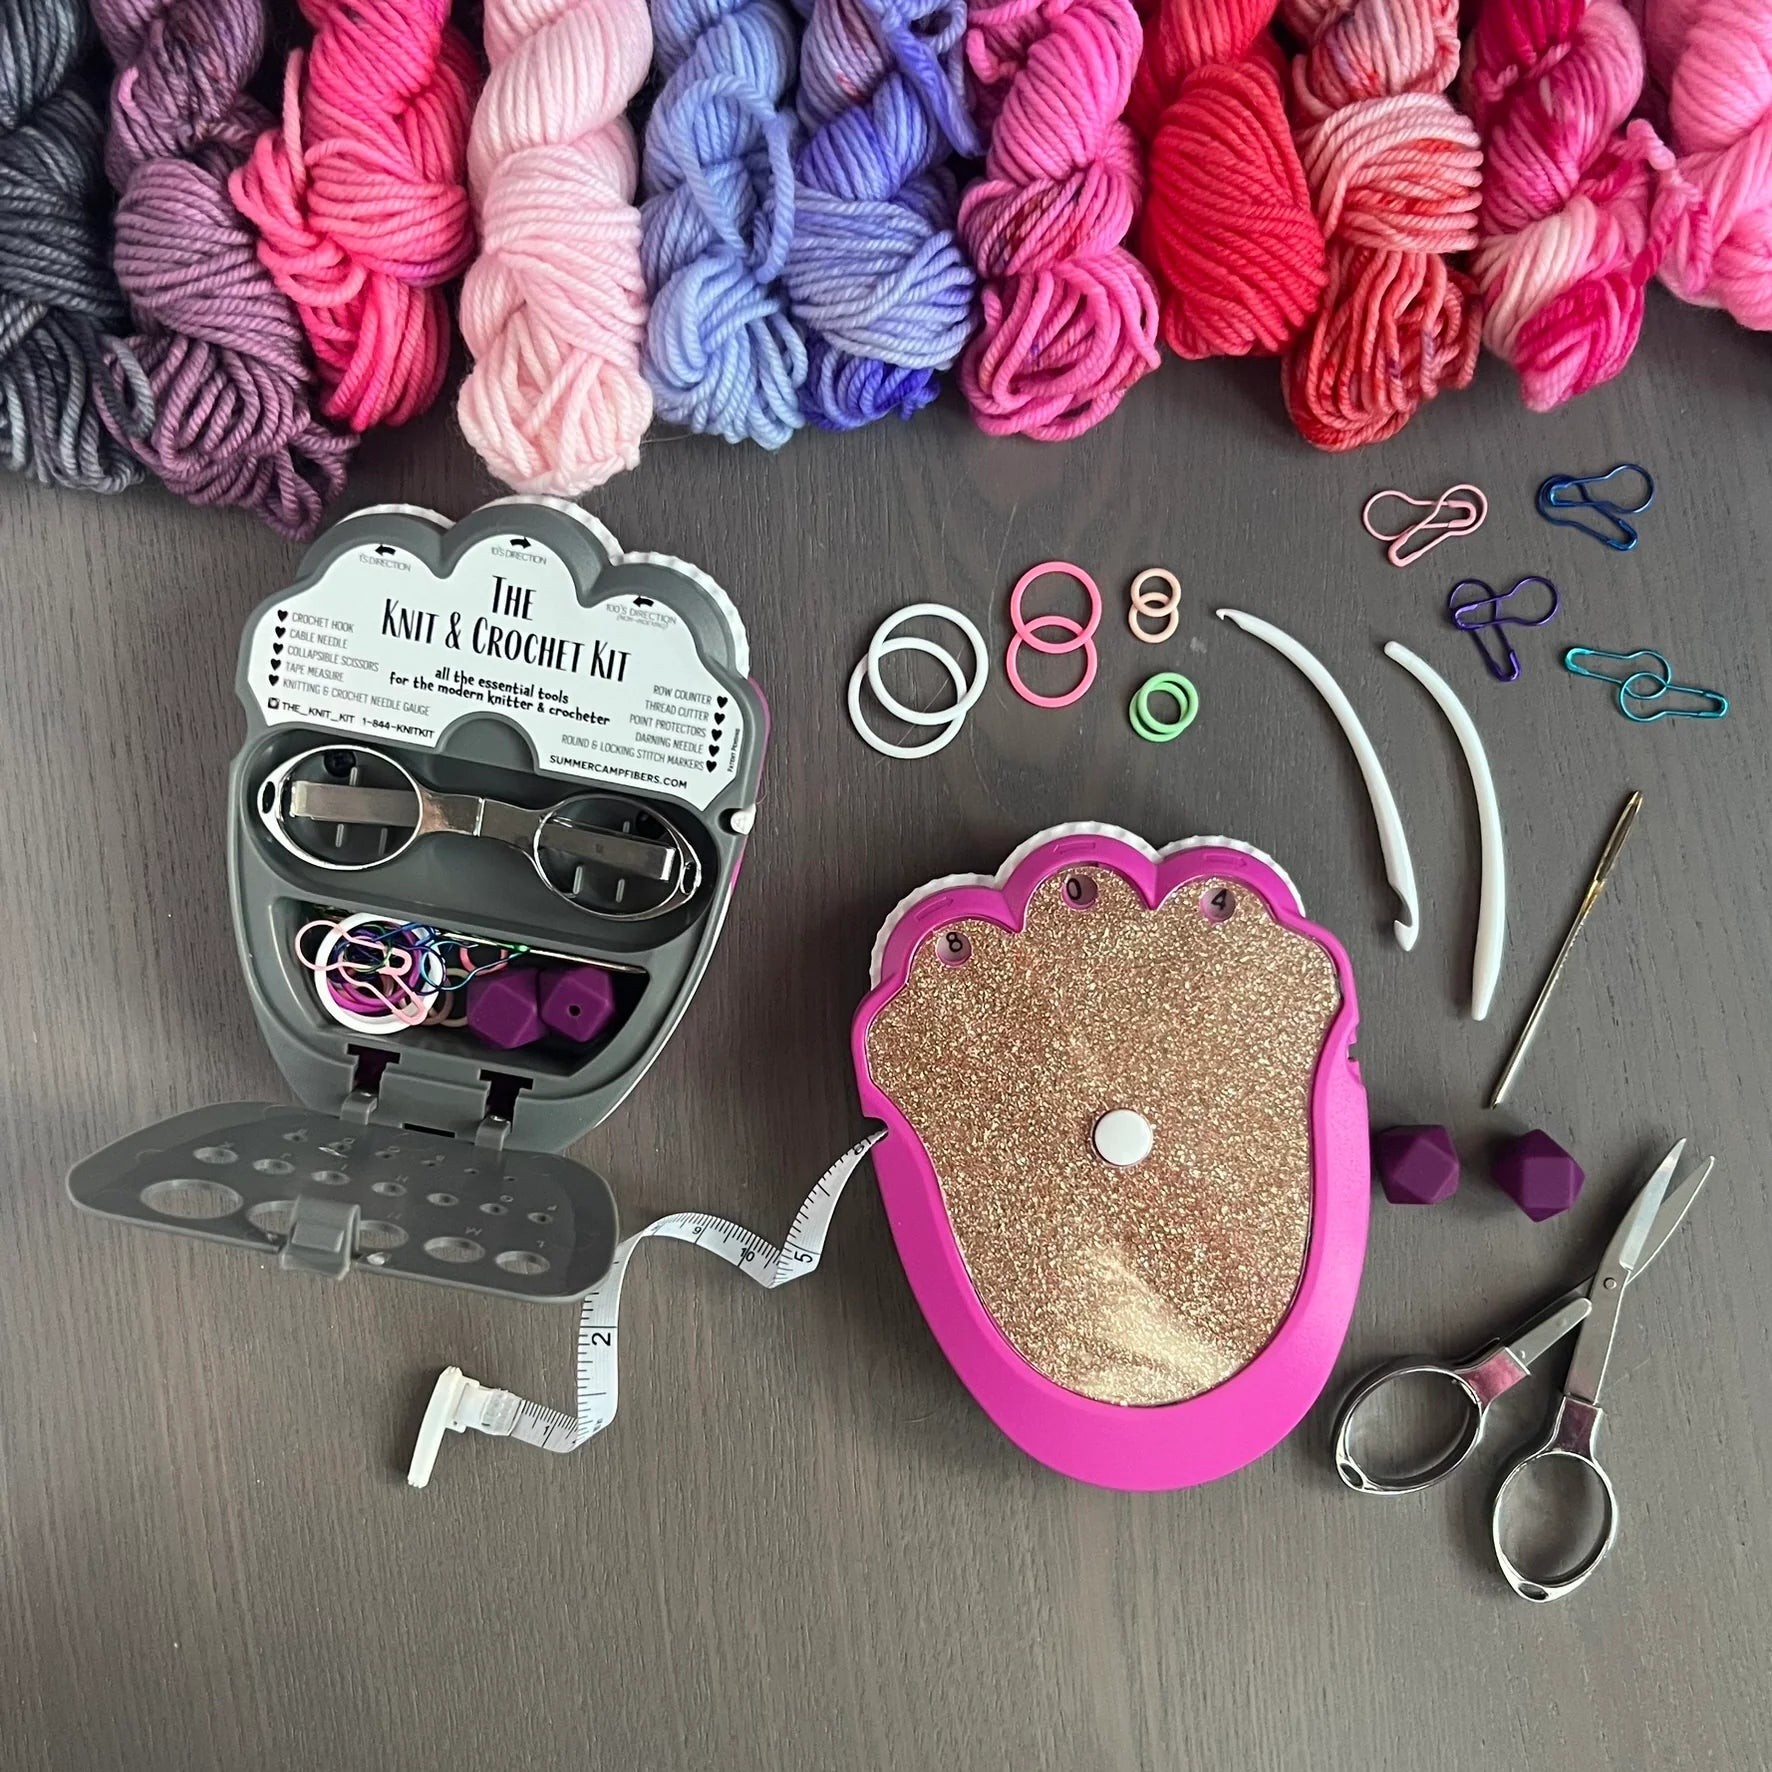 Summer Camp Fibers The Knit & Crochet Kit - Summer Camp Fibers - Love Stitch - The Little Yarn Store